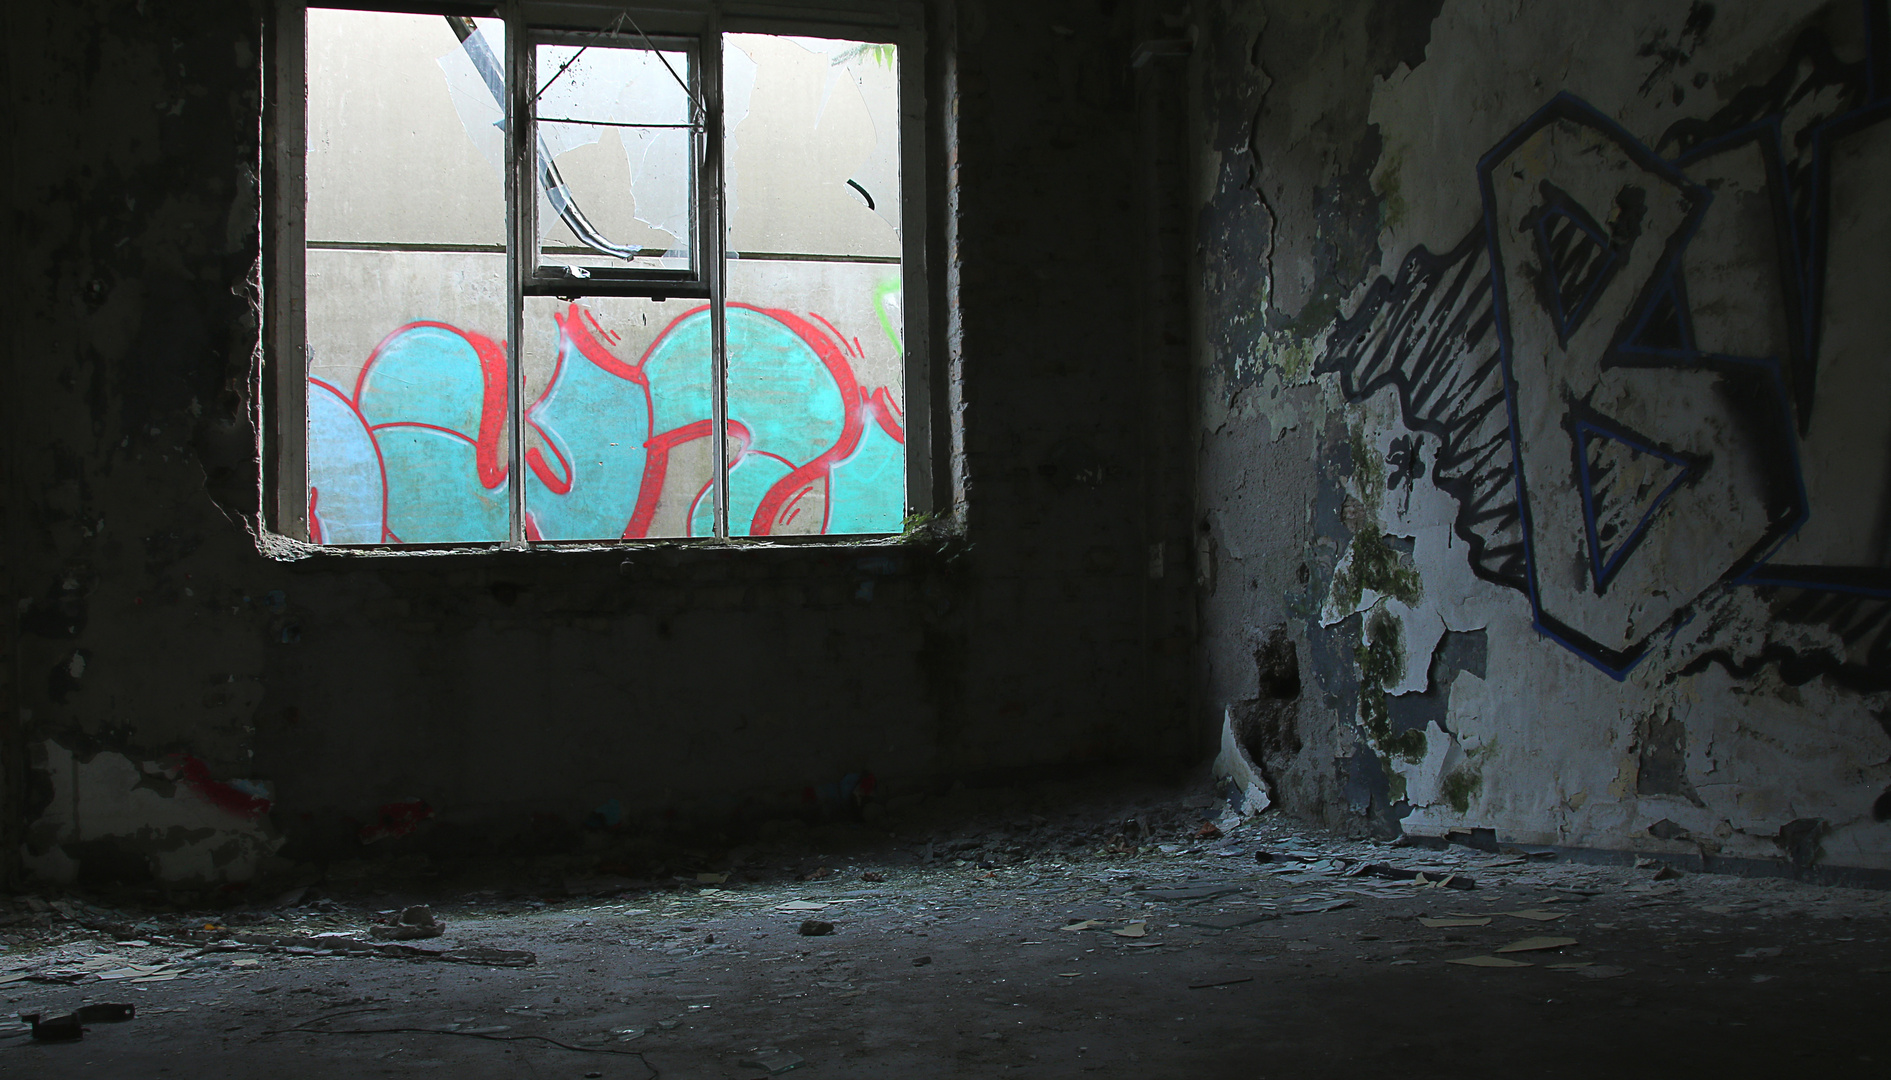 Graffiti meets lost places